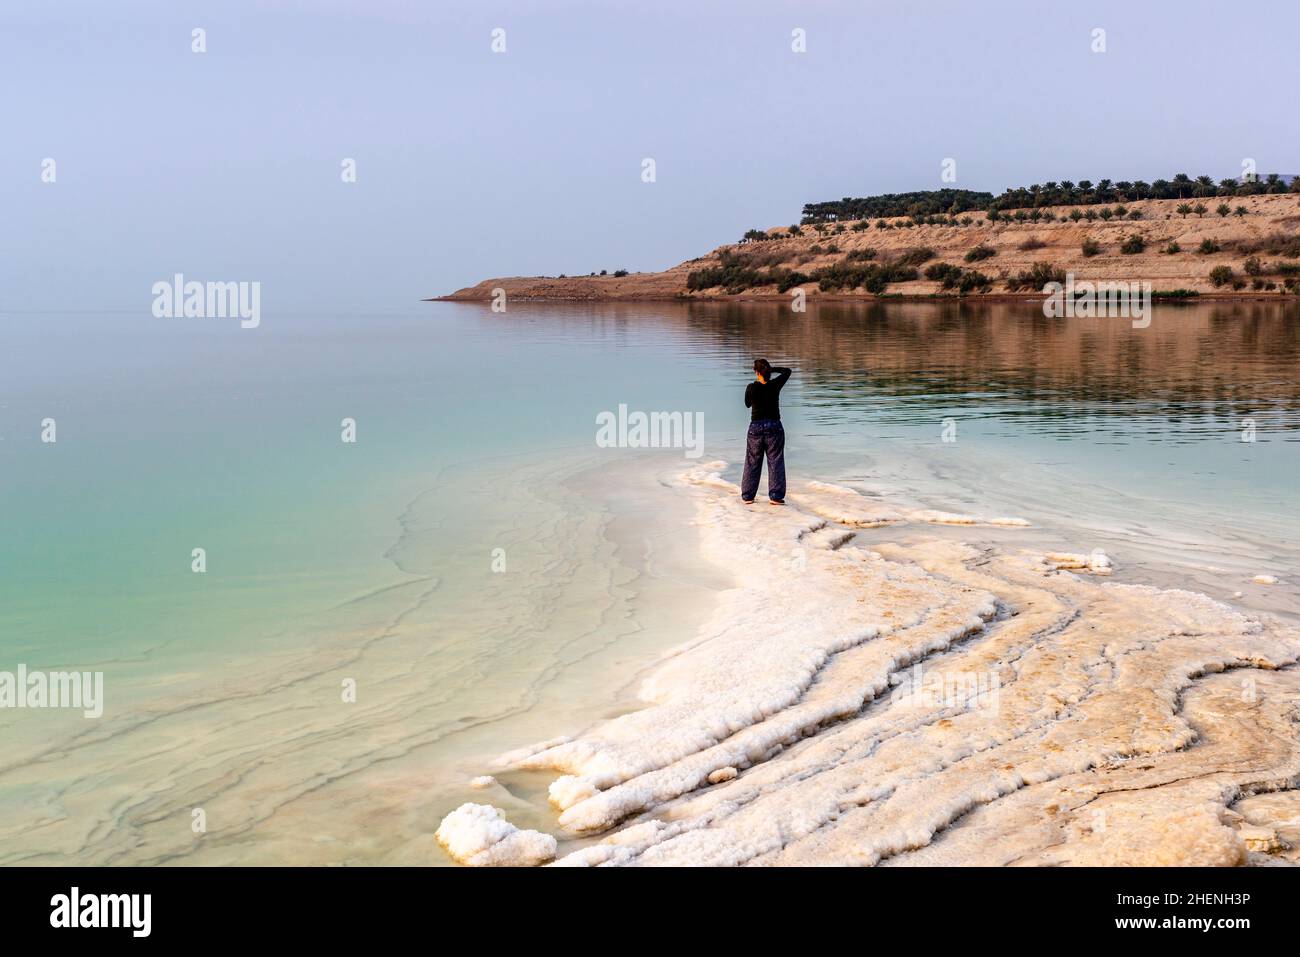 A Visitor Taking Photographs Of The Dead Sea, The Dead Sea, Jordan, Asia Stock Photo